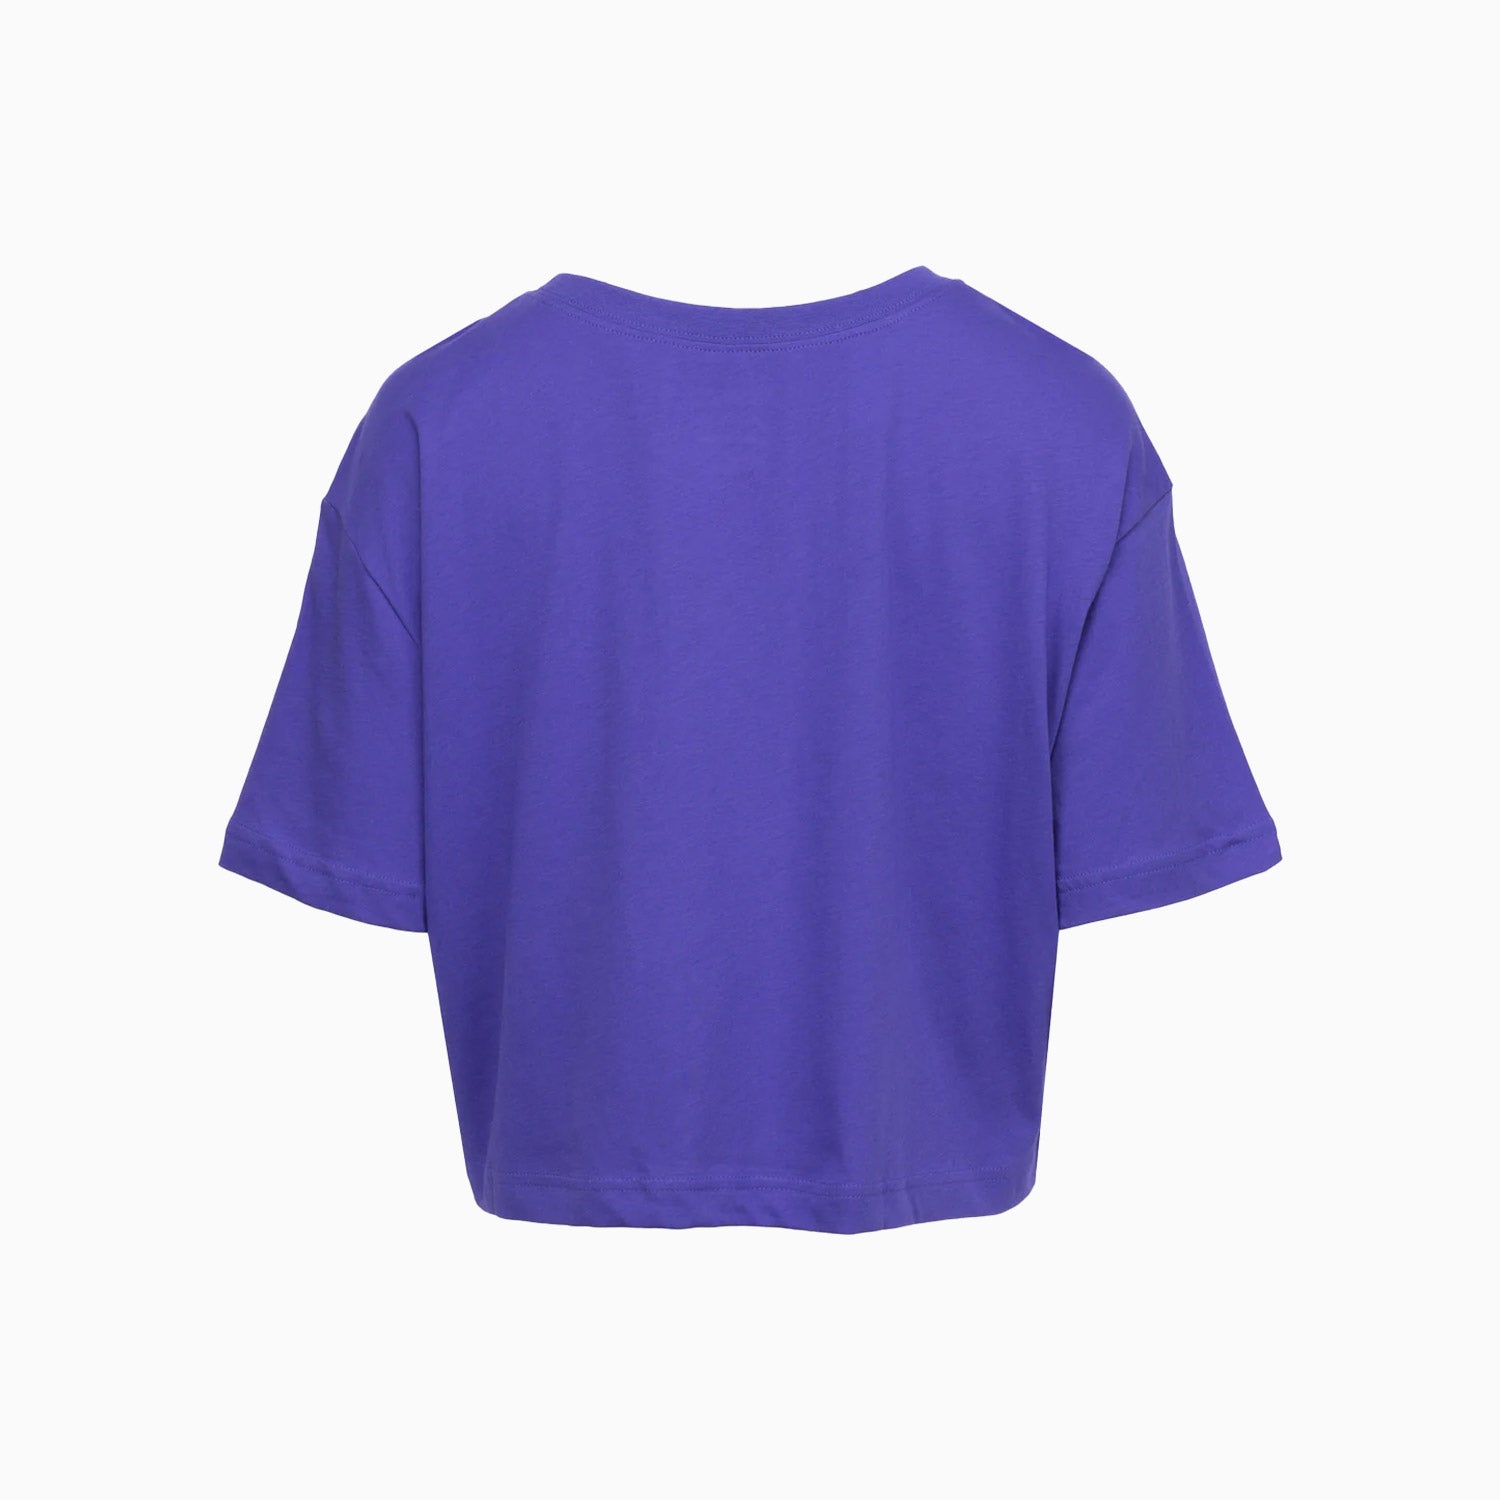 nike-womens-nike-sportswear-essential-t-shirt-bv6175-430